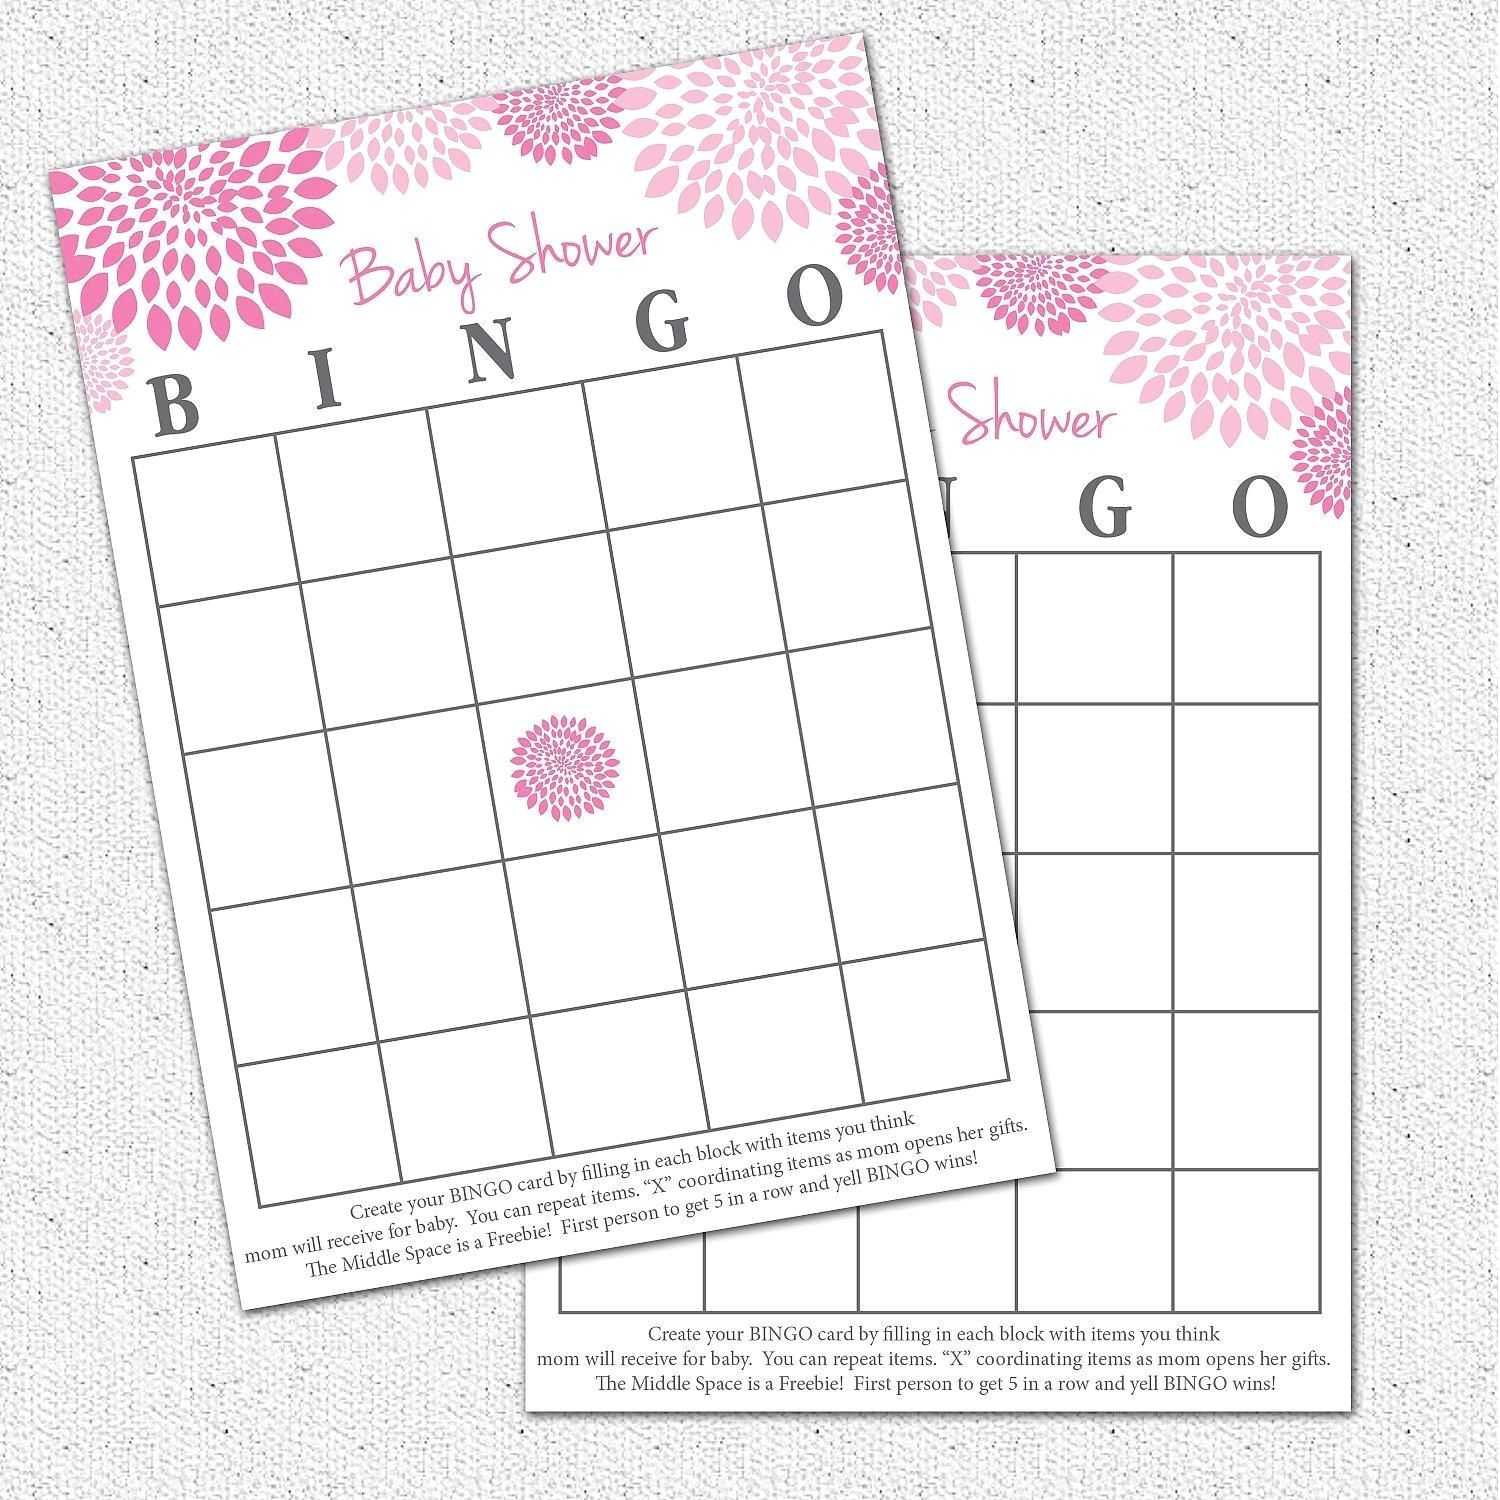 Blank Bingo Card Template Microsoft Word – Plancha With Blank Bingo Card Template Microsoft Word